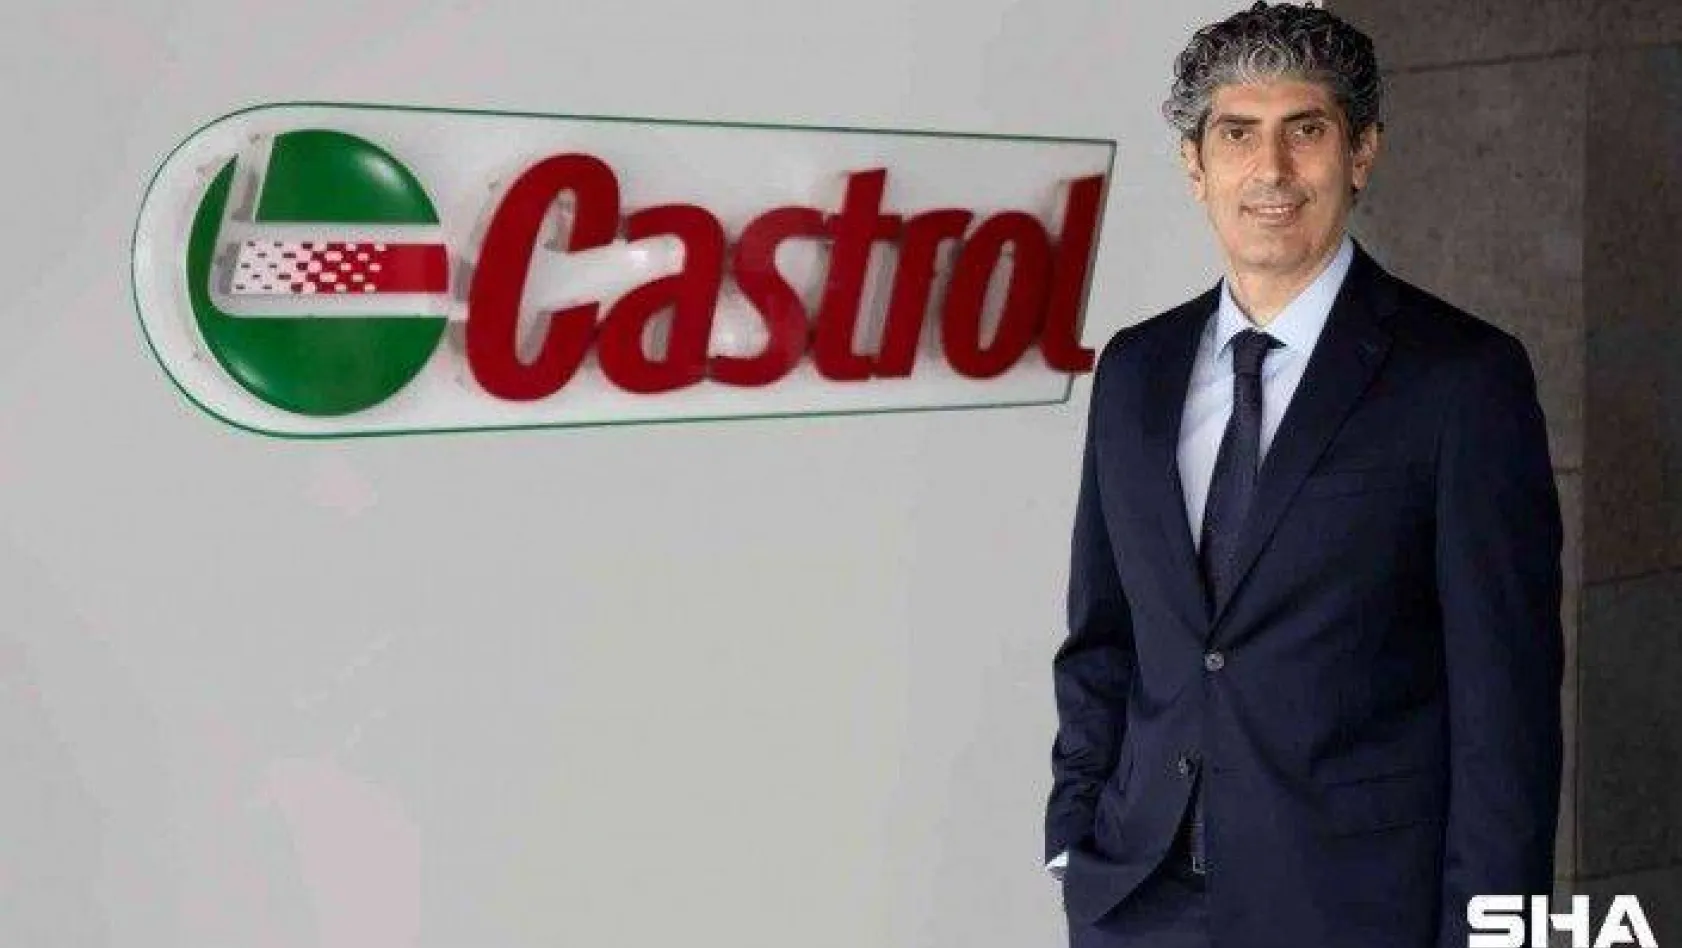 Castrol Auto Service ağı 75 noktaya ulaştı